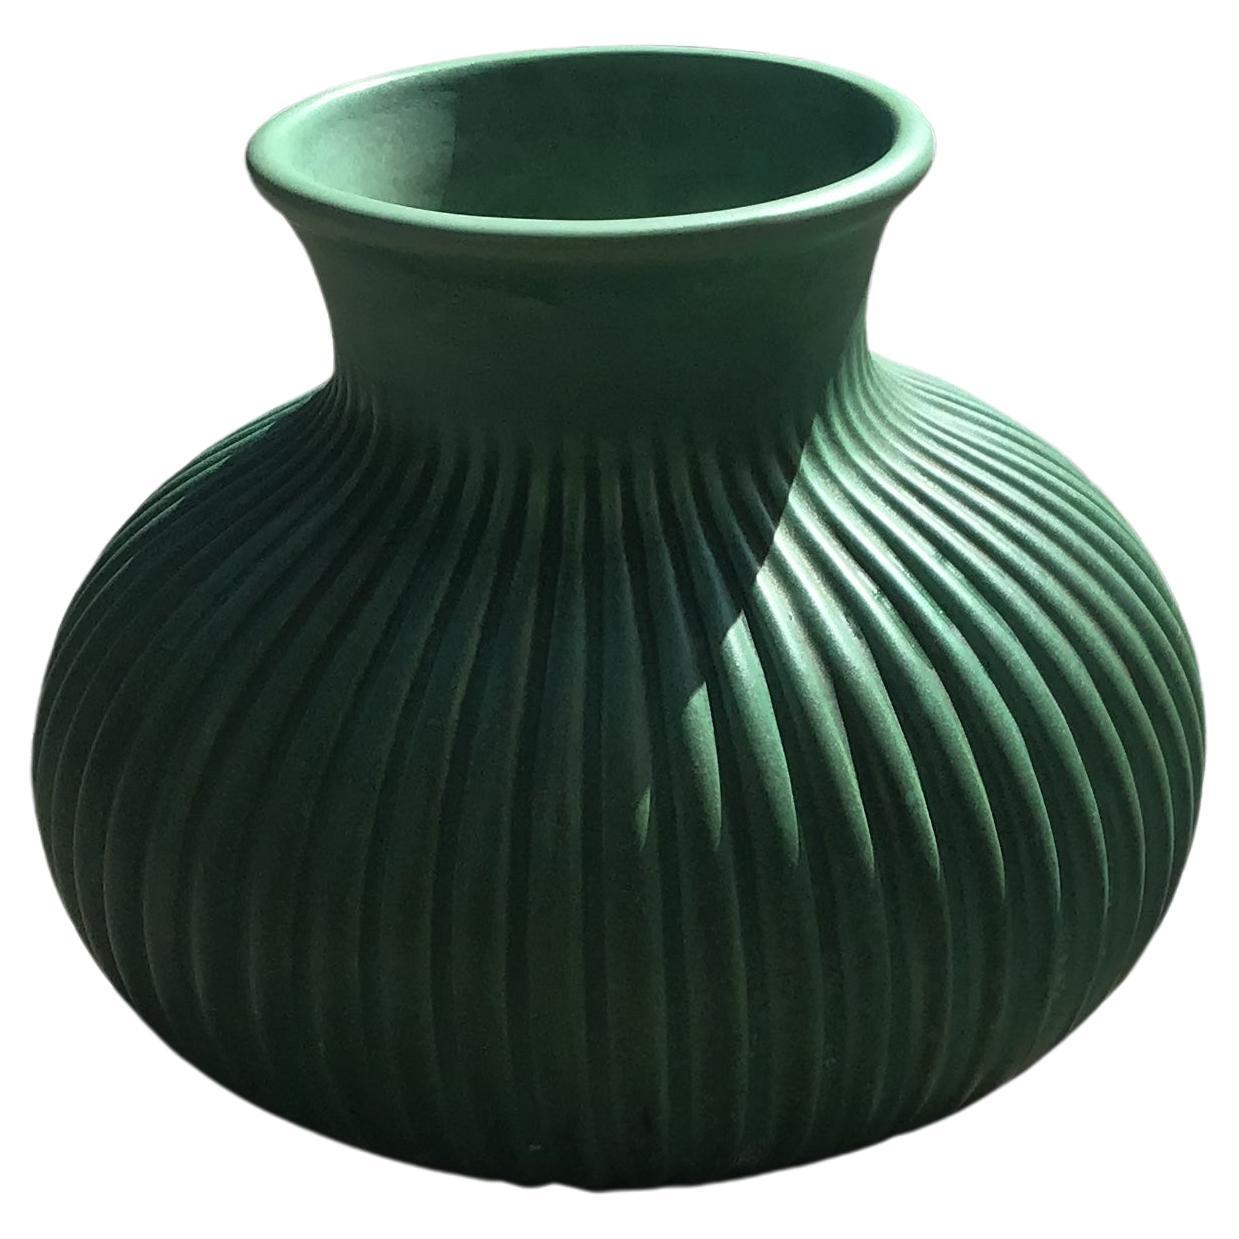 Richard Ginori “Pittoria Di Doccia” Porcelana Vase 1940 Italy For Sale at  1stDibs | richard ginori pittoria doccia, pittoria richard ginori italy,  ginori vase